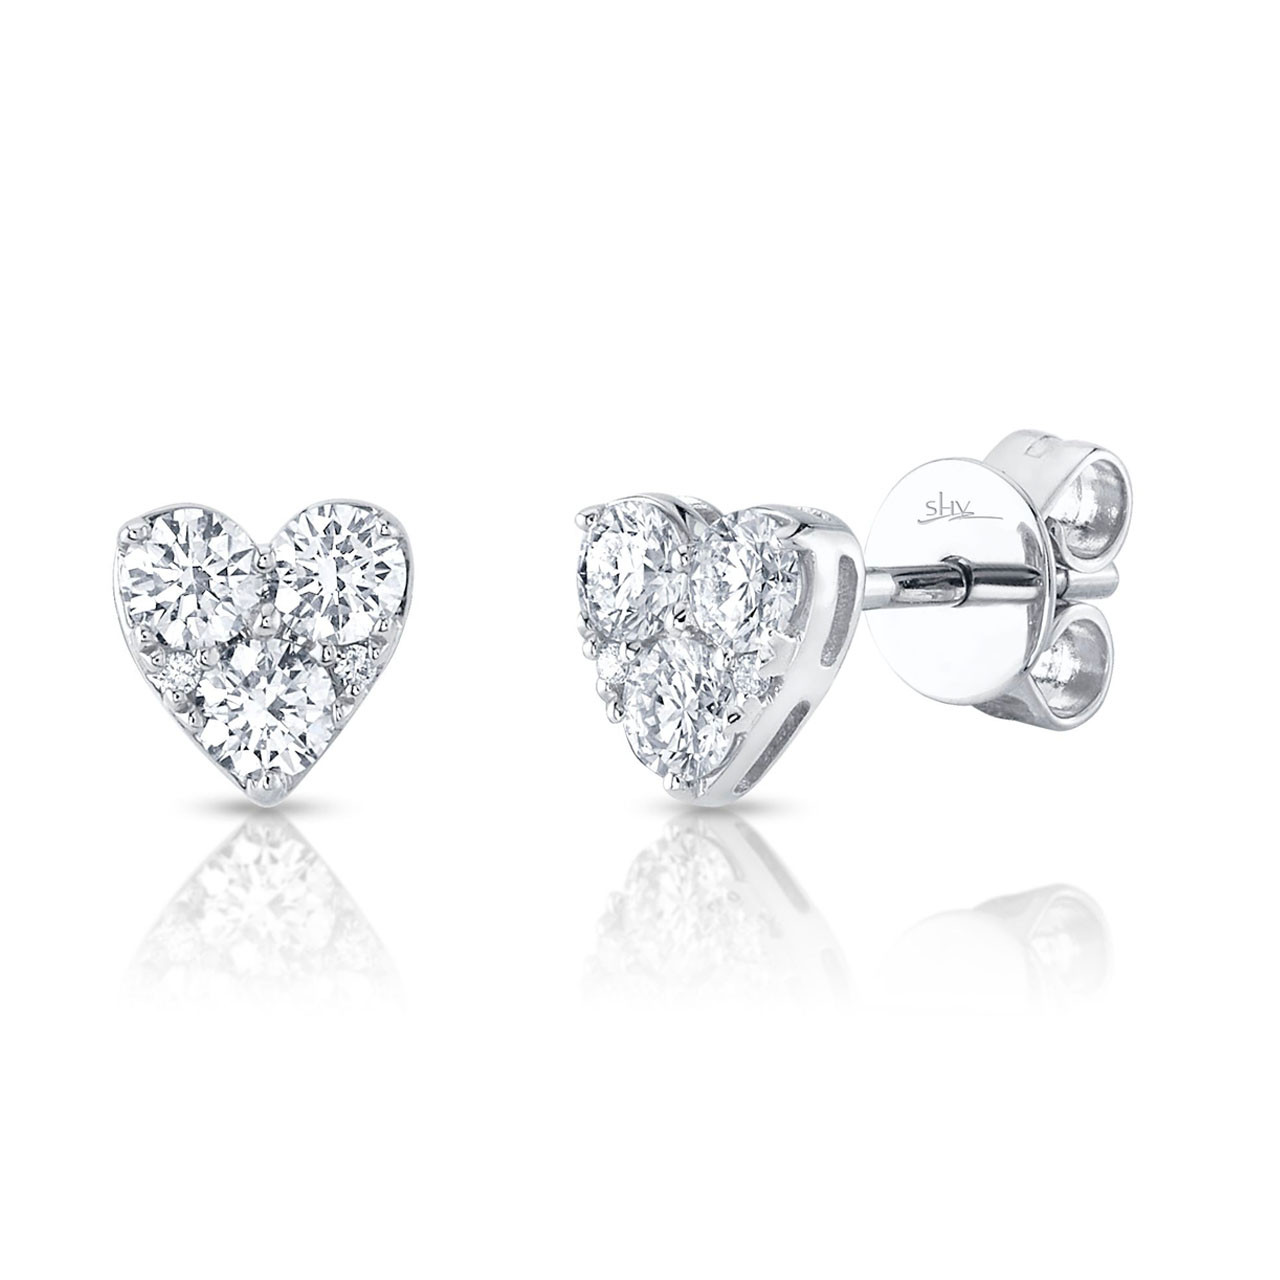 A pair of heart shape diamond earrings 